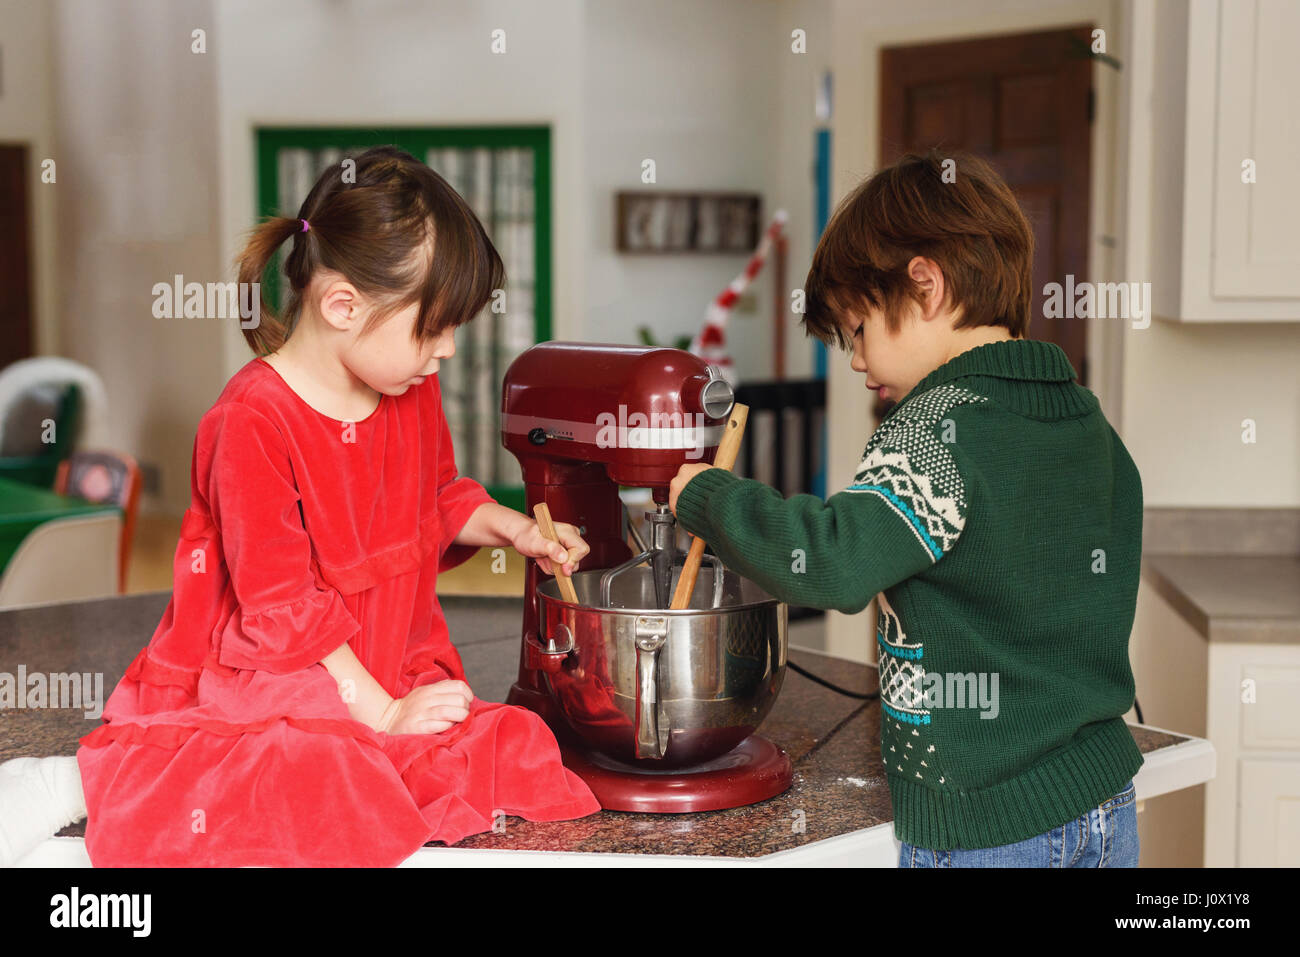 Two children baking cookies Stock Photo